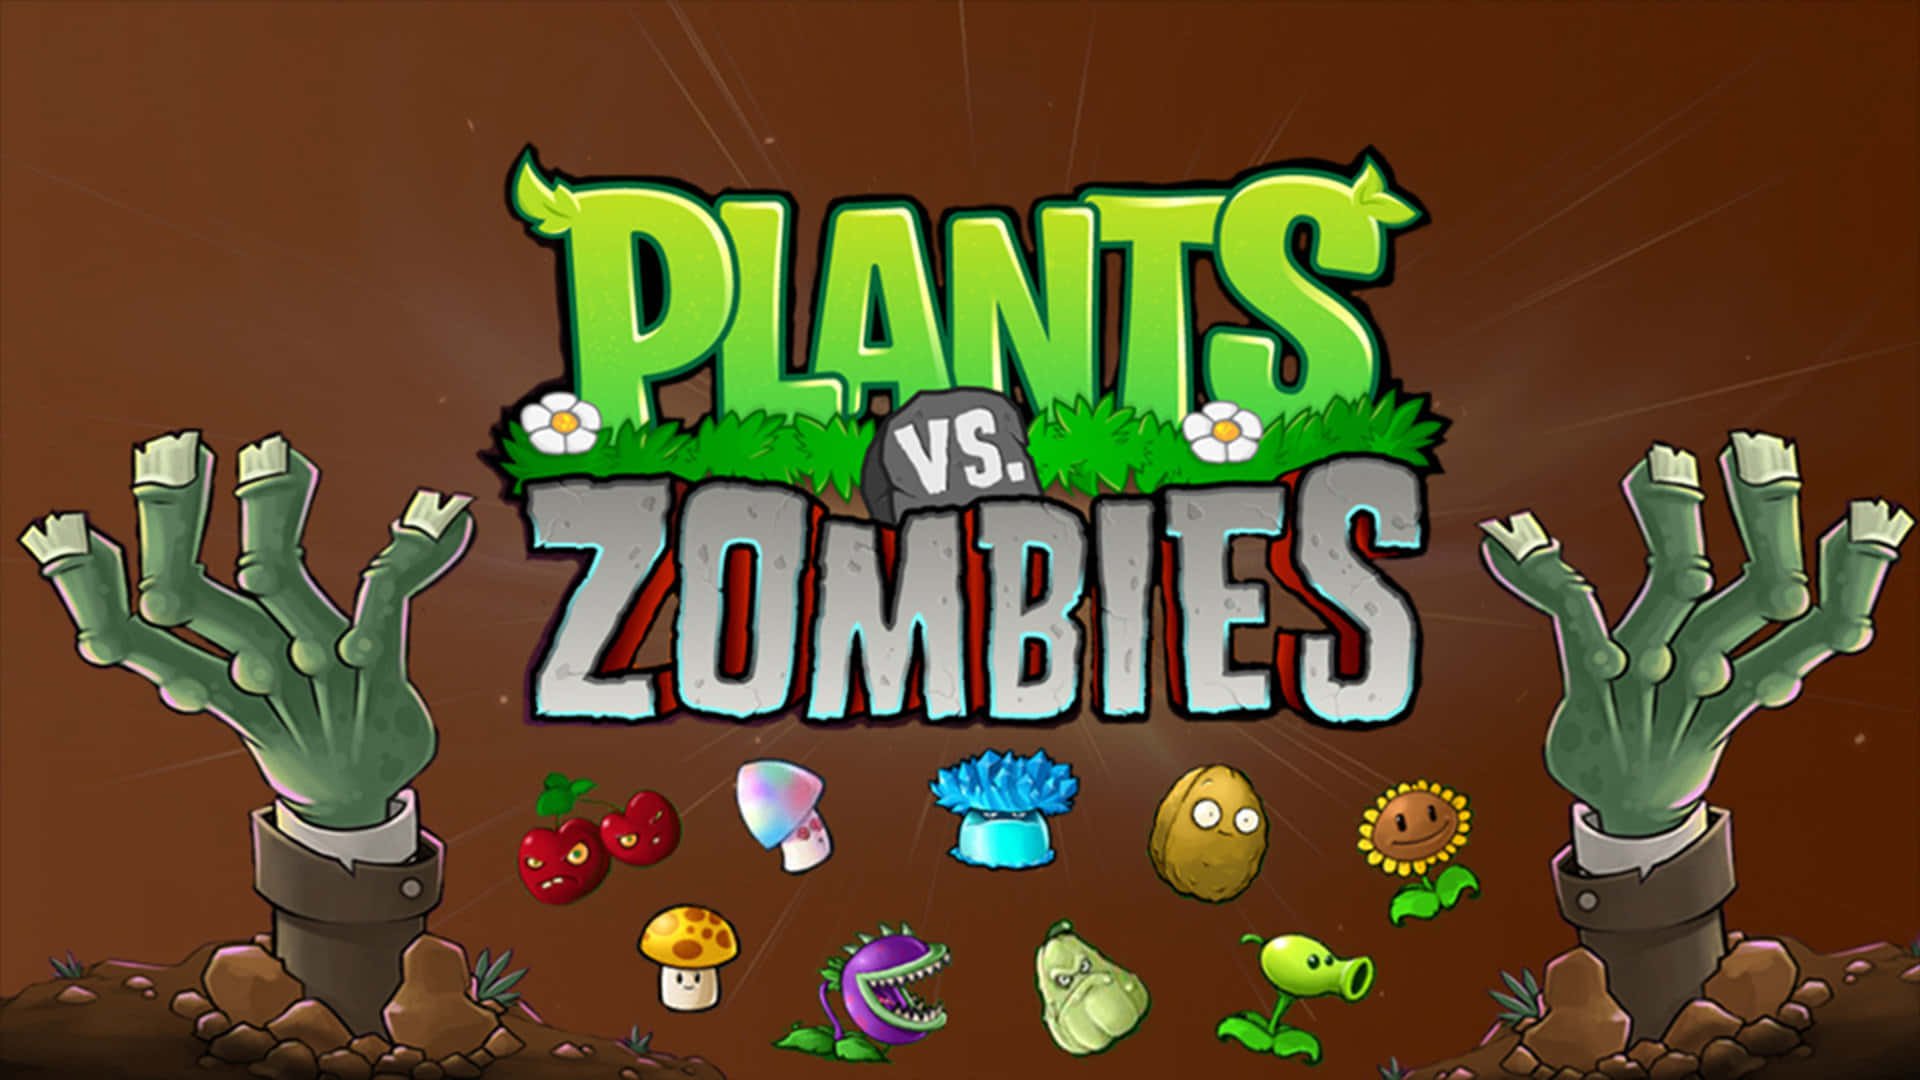 Зачем против зомби. Растения против зомби 1 зомби. Игра Plants vs Zombies 4. Растения из растения против зомби 1. Растение против зомби растения зомби.